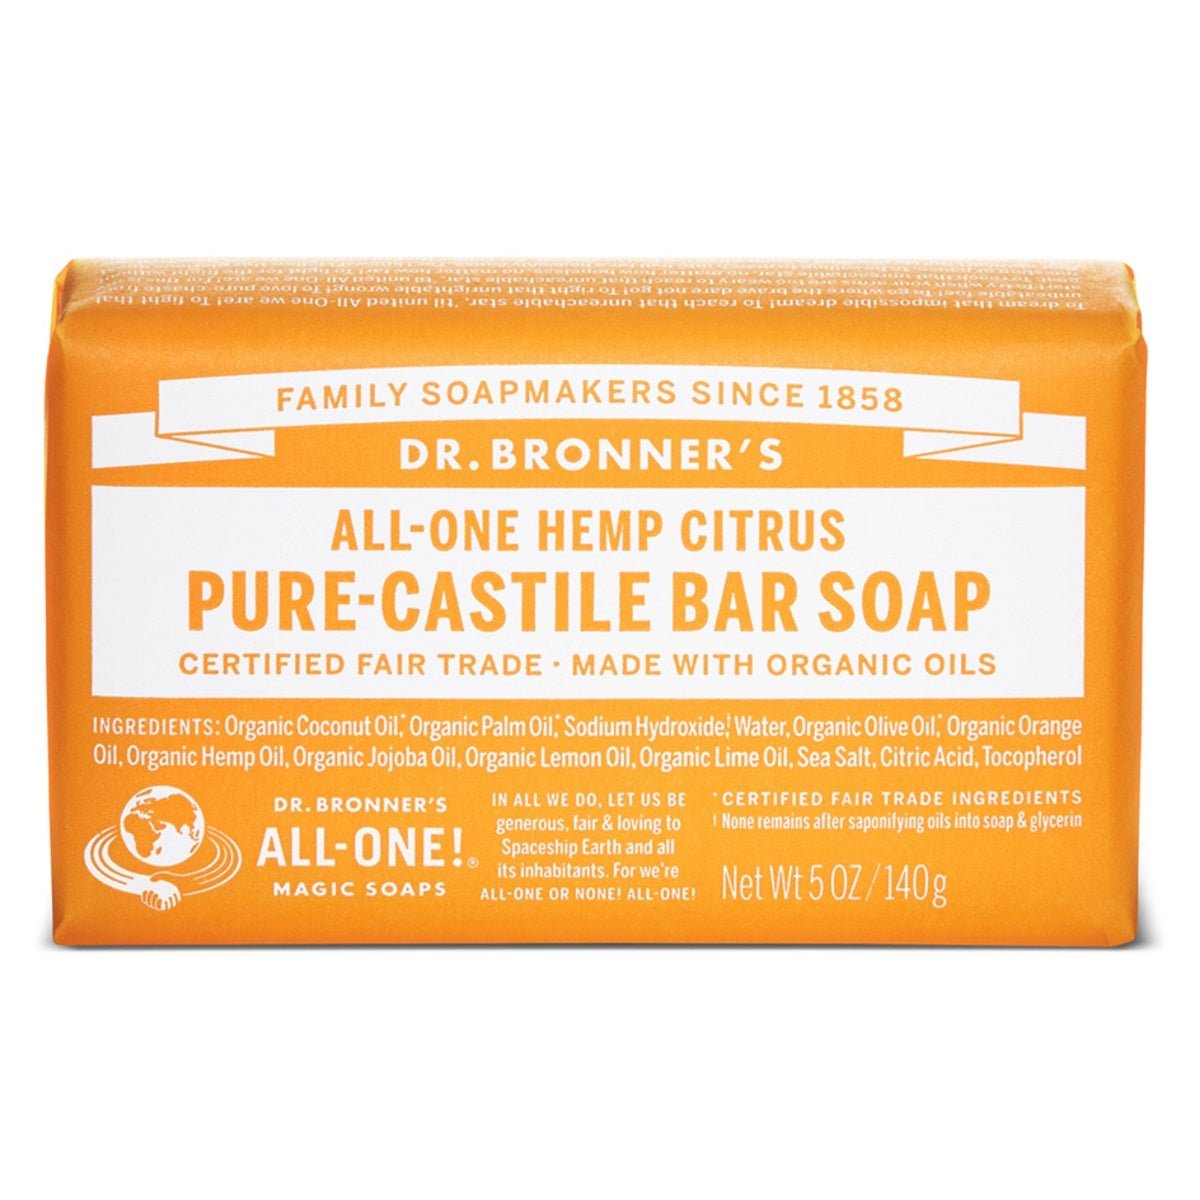 Primary image of Citrus Castile Bar Soap